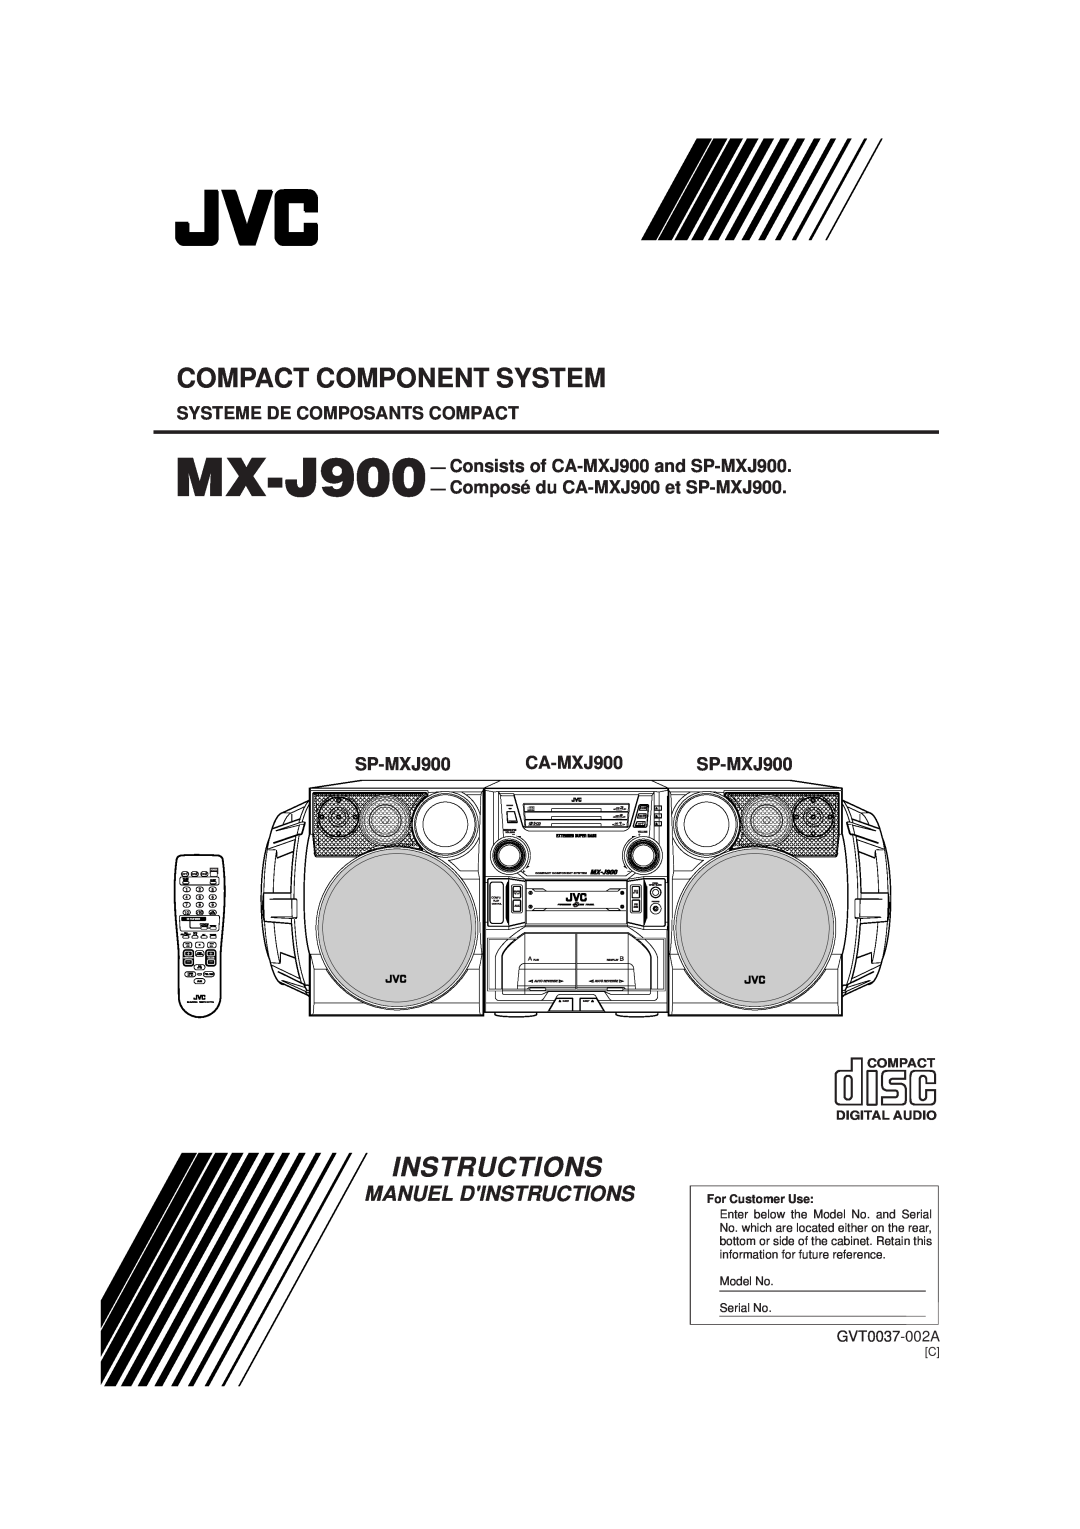 JVC manual Instructions, Systeme De Composants Compact, MX-J900- Consists of CA-MXJ900and SP-MXJ900, GVT0037-002A 